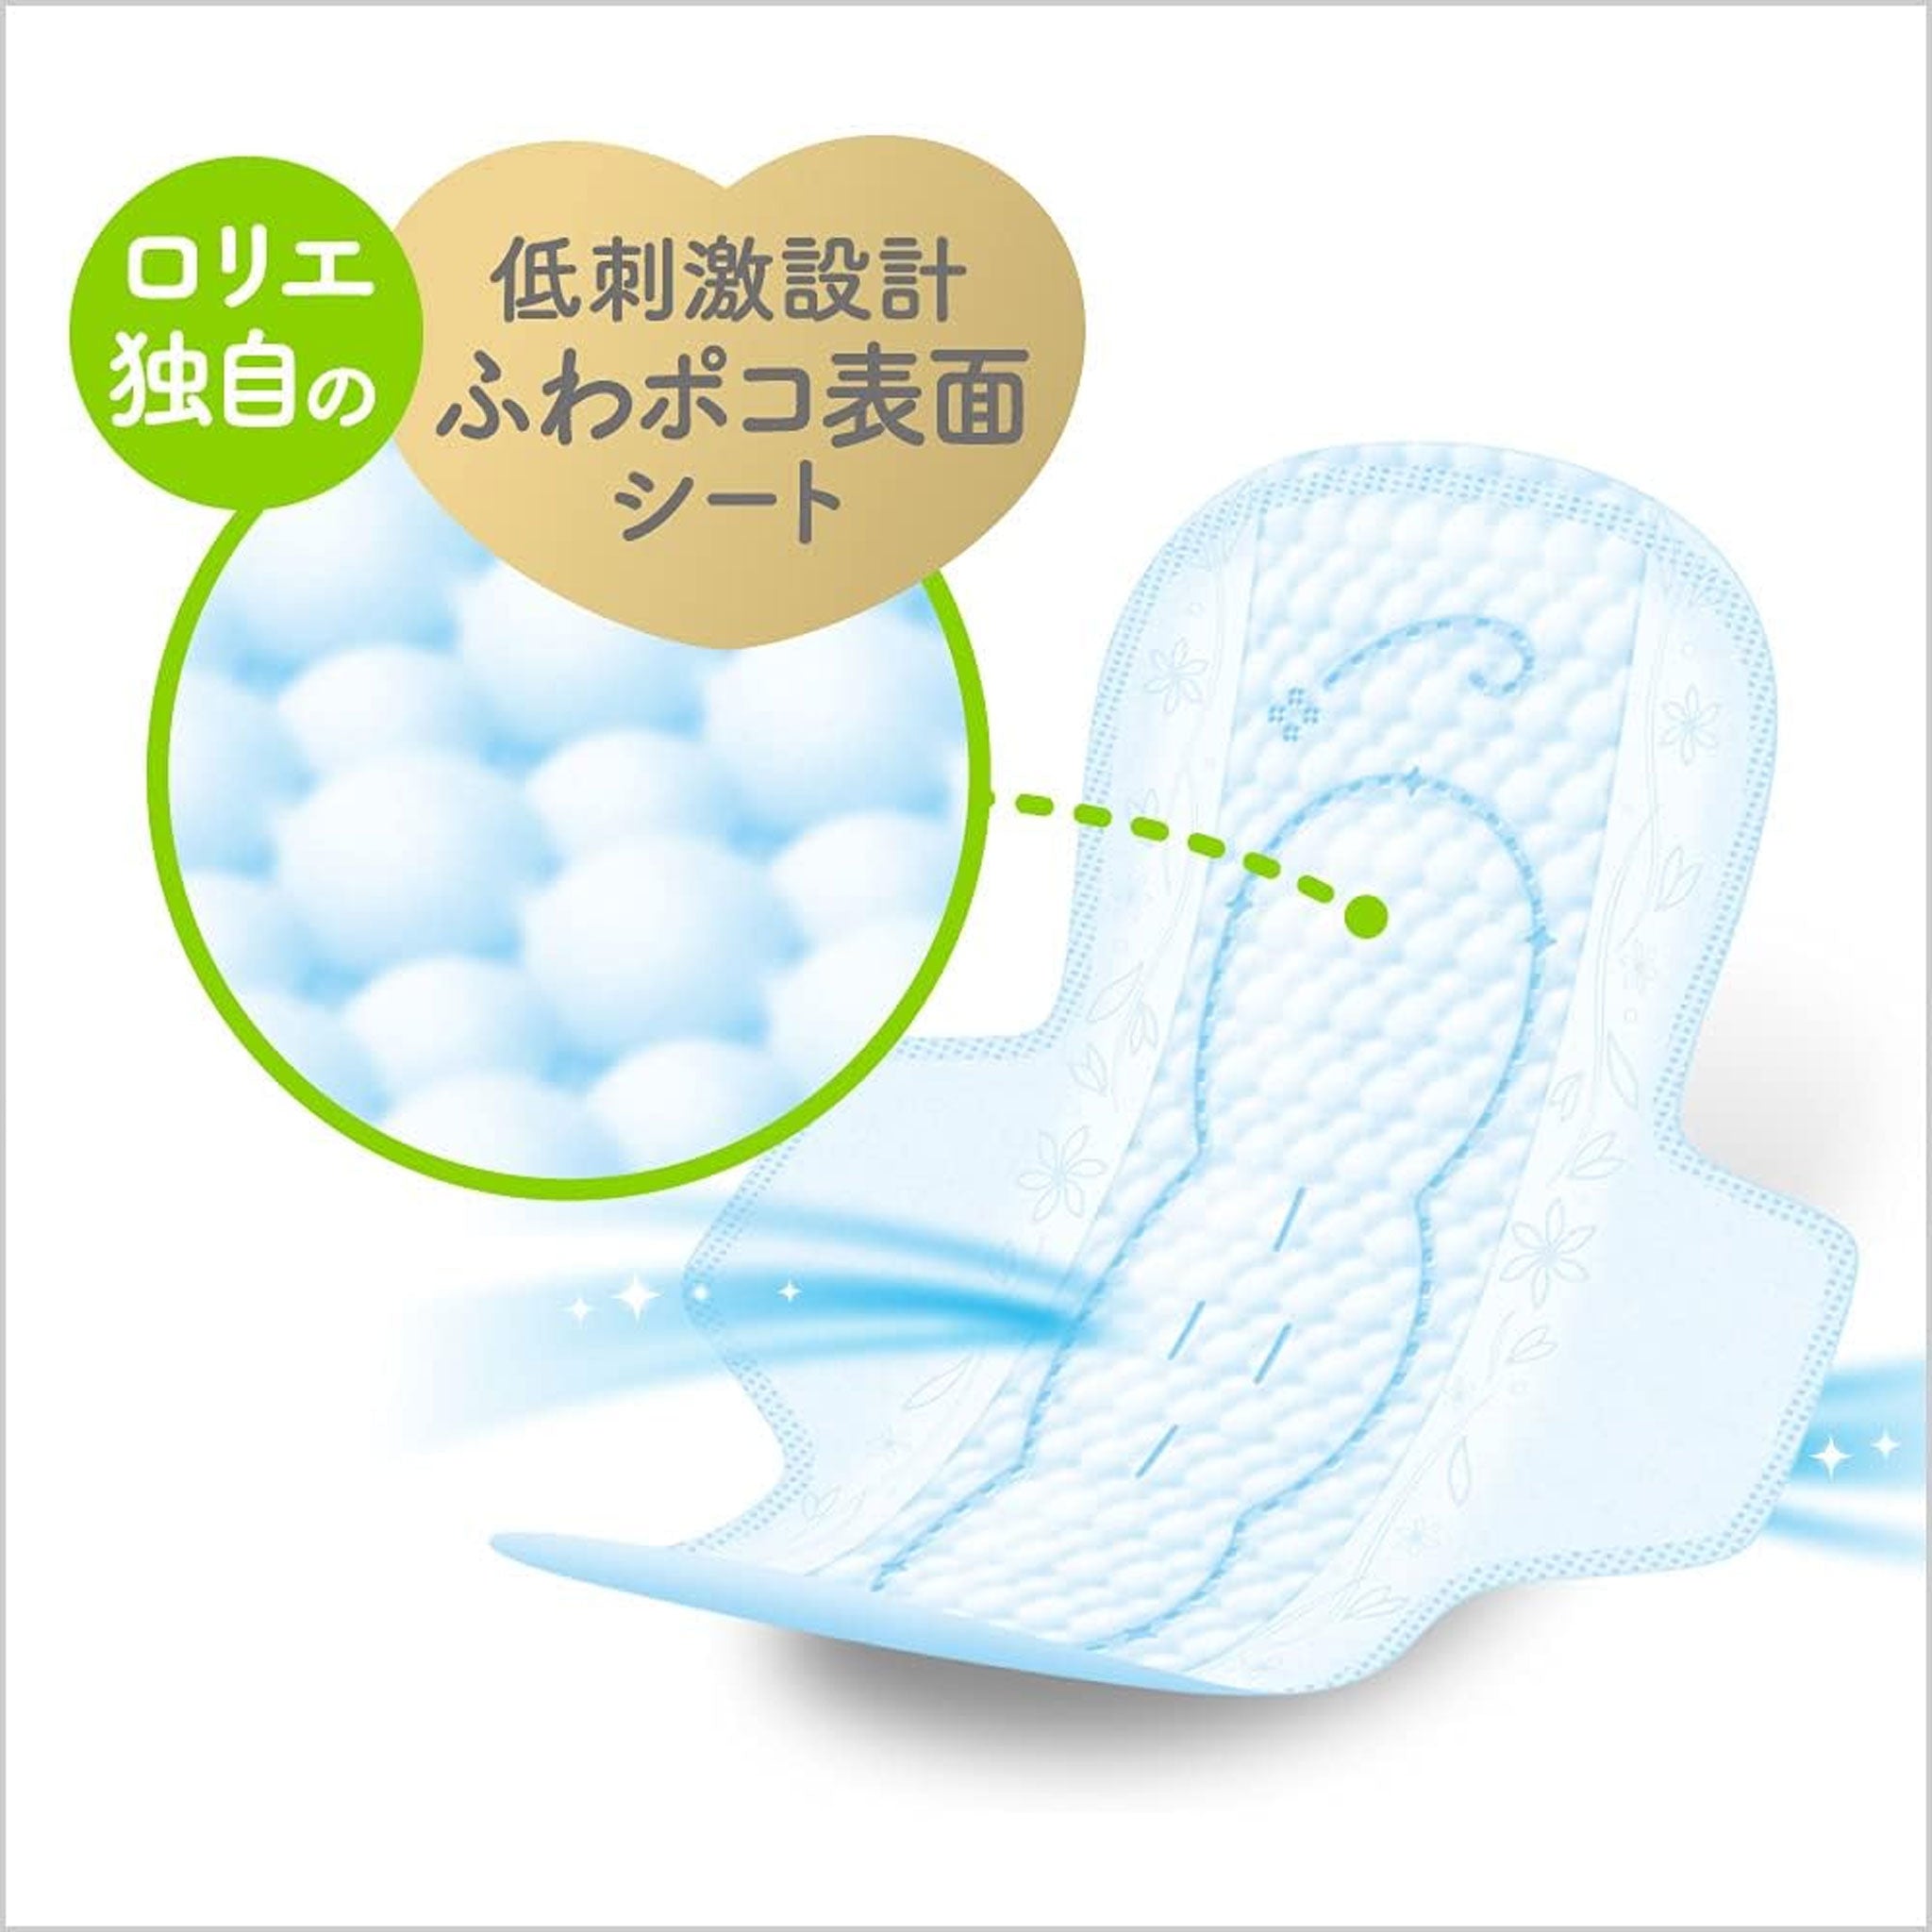 KAO 花王 Laurier 敏感肌可用日用卫生巾超吸收 22.5cm 20片